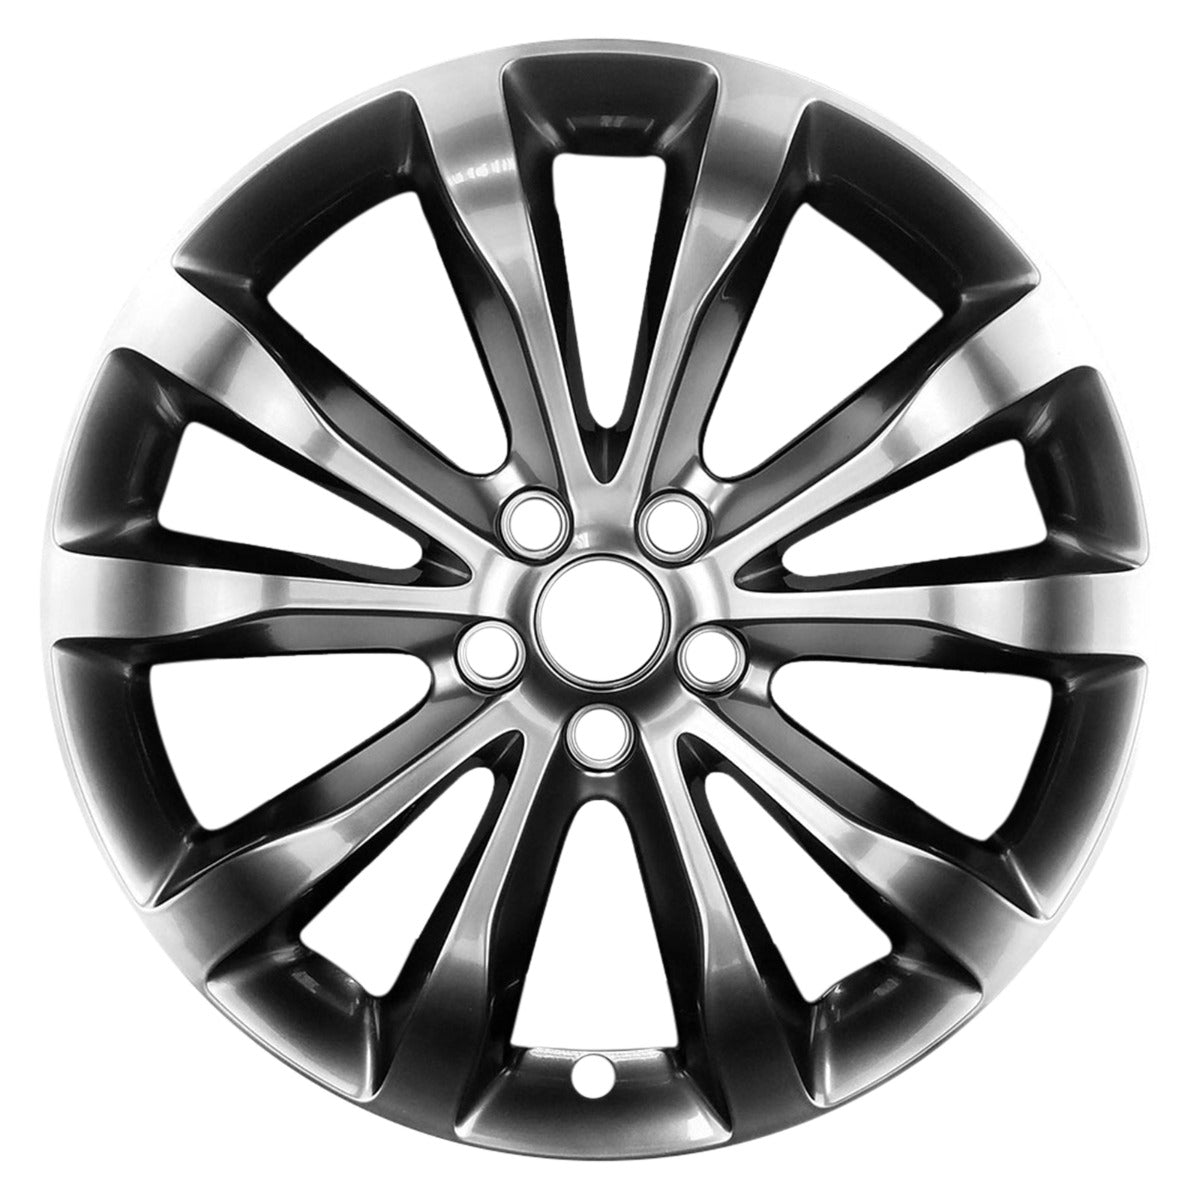 2014 Chrysler 300 19" OEM Wheel Rim W2530H